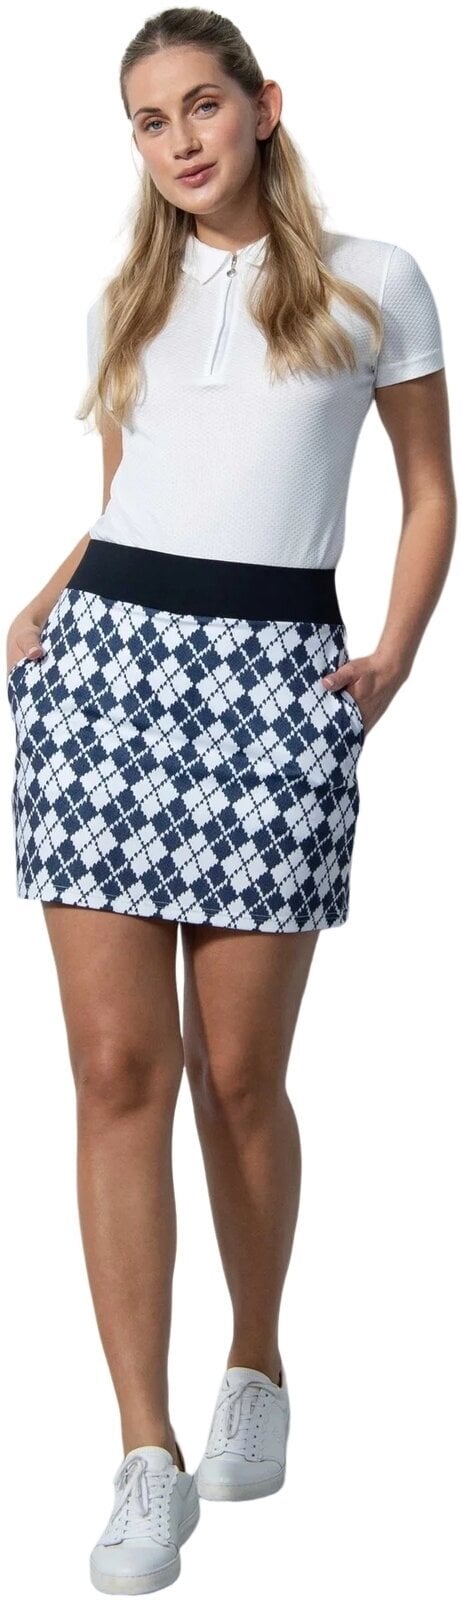 Skirt / Dress Daily Sports Abruzzo Skort 45 cm Argyle S